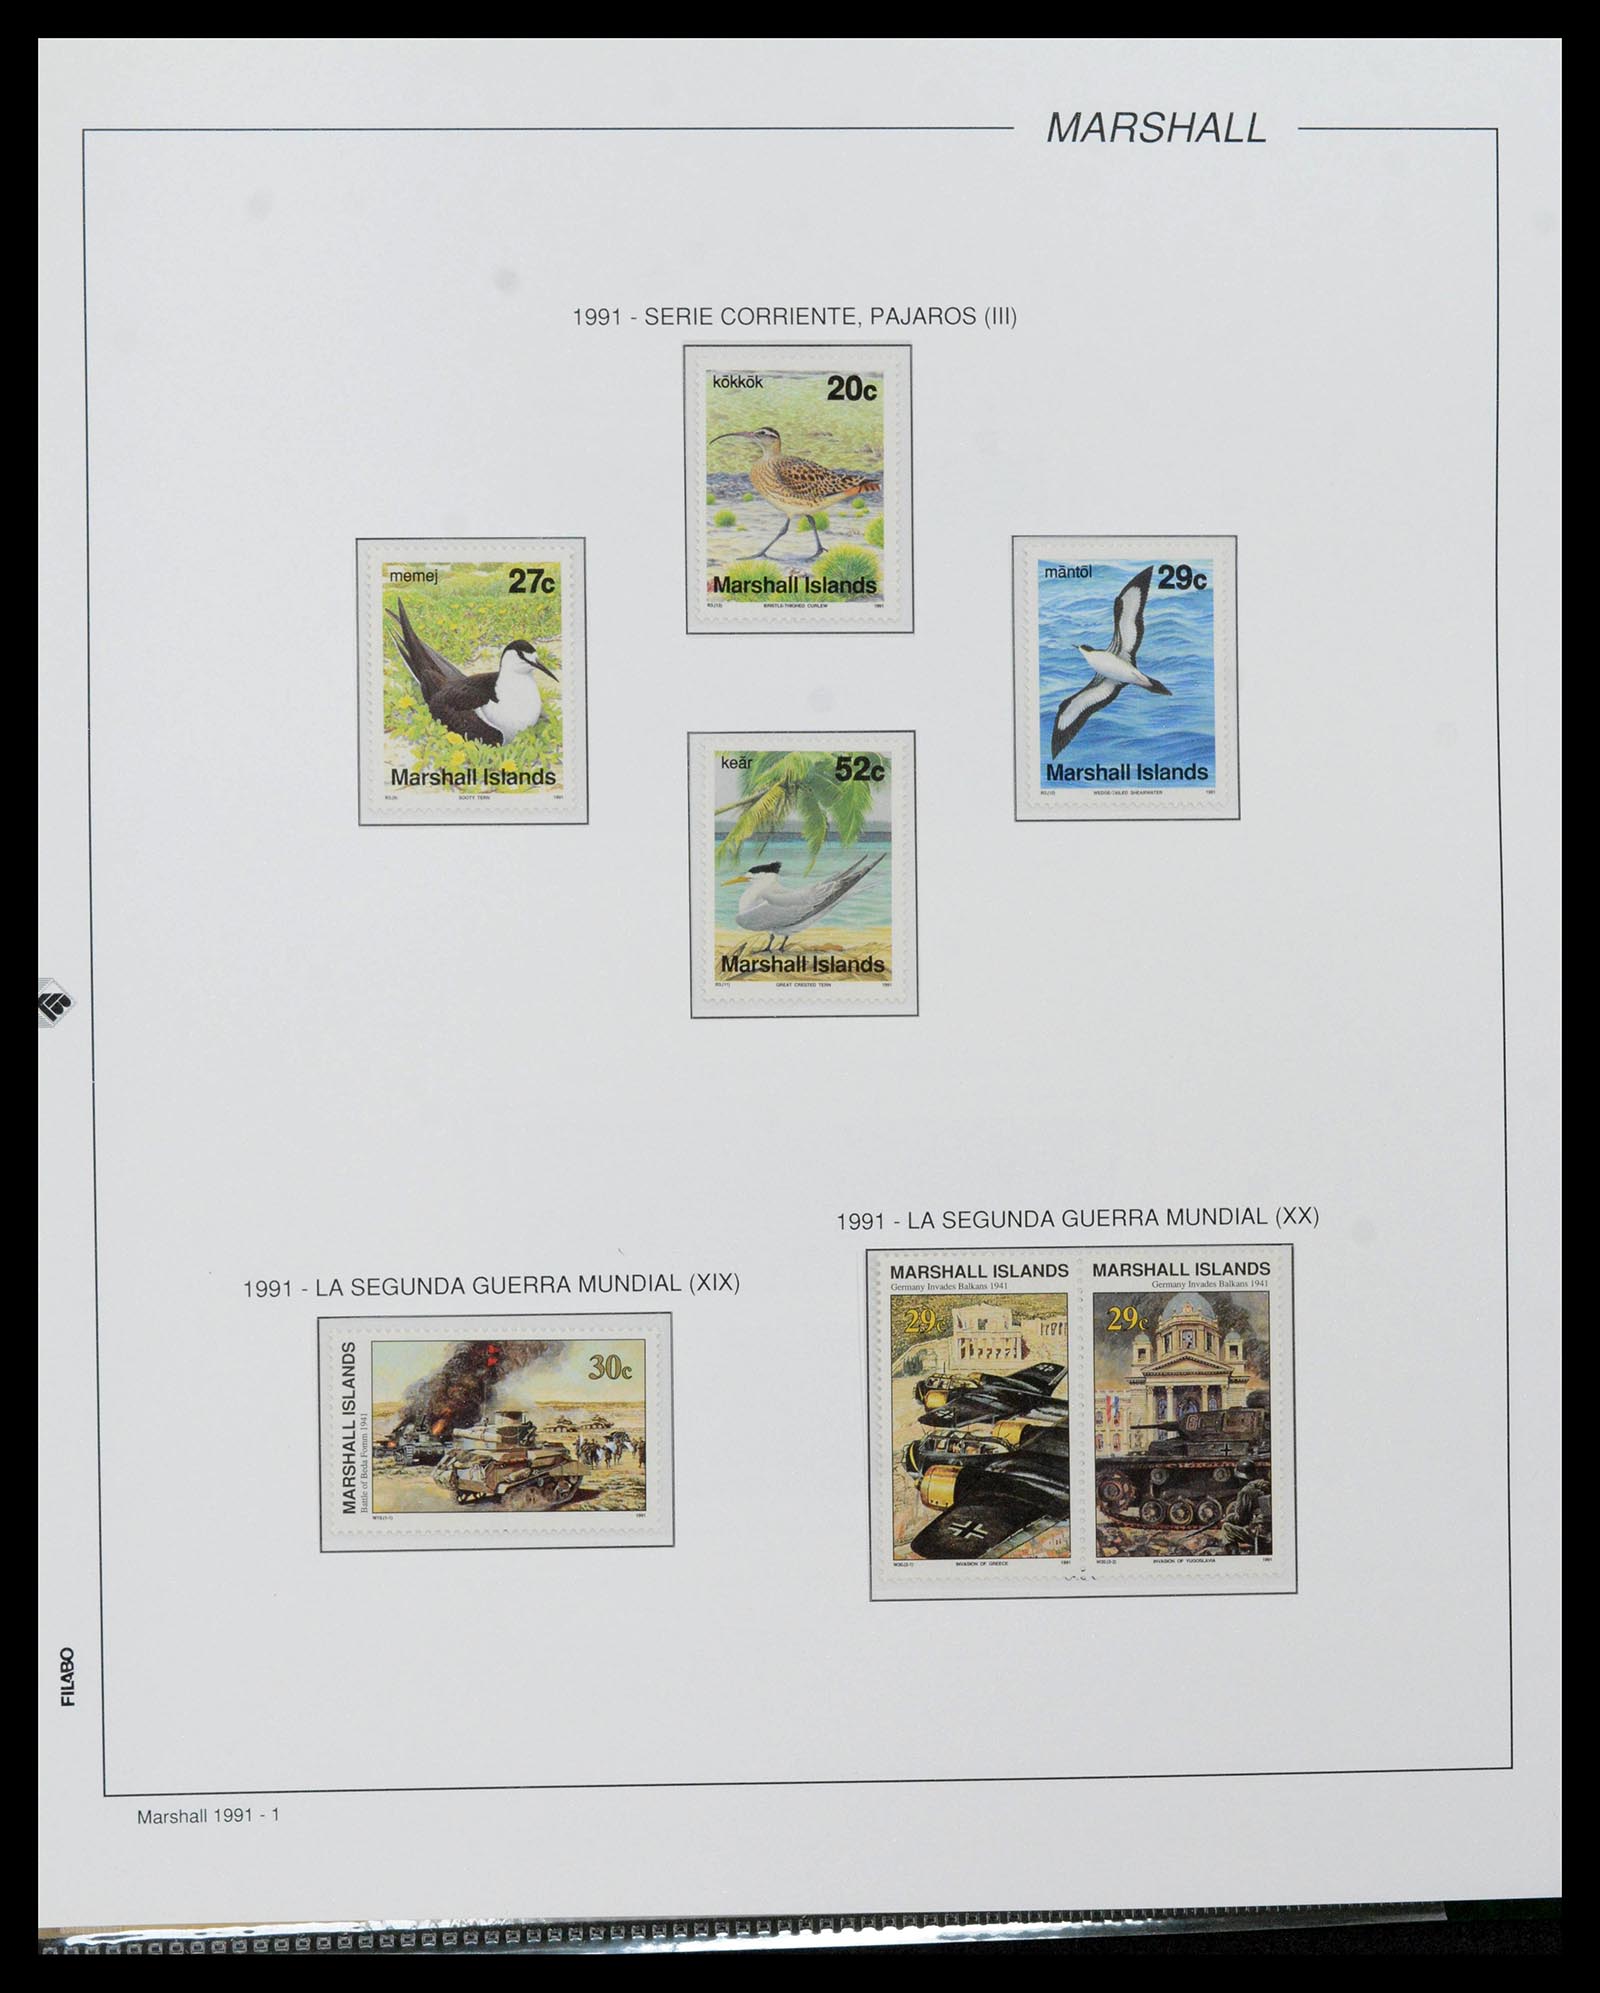 39222 0152 - Stamp collection 39222 Palau, Micronesia and Marshall islands 1980-1995.